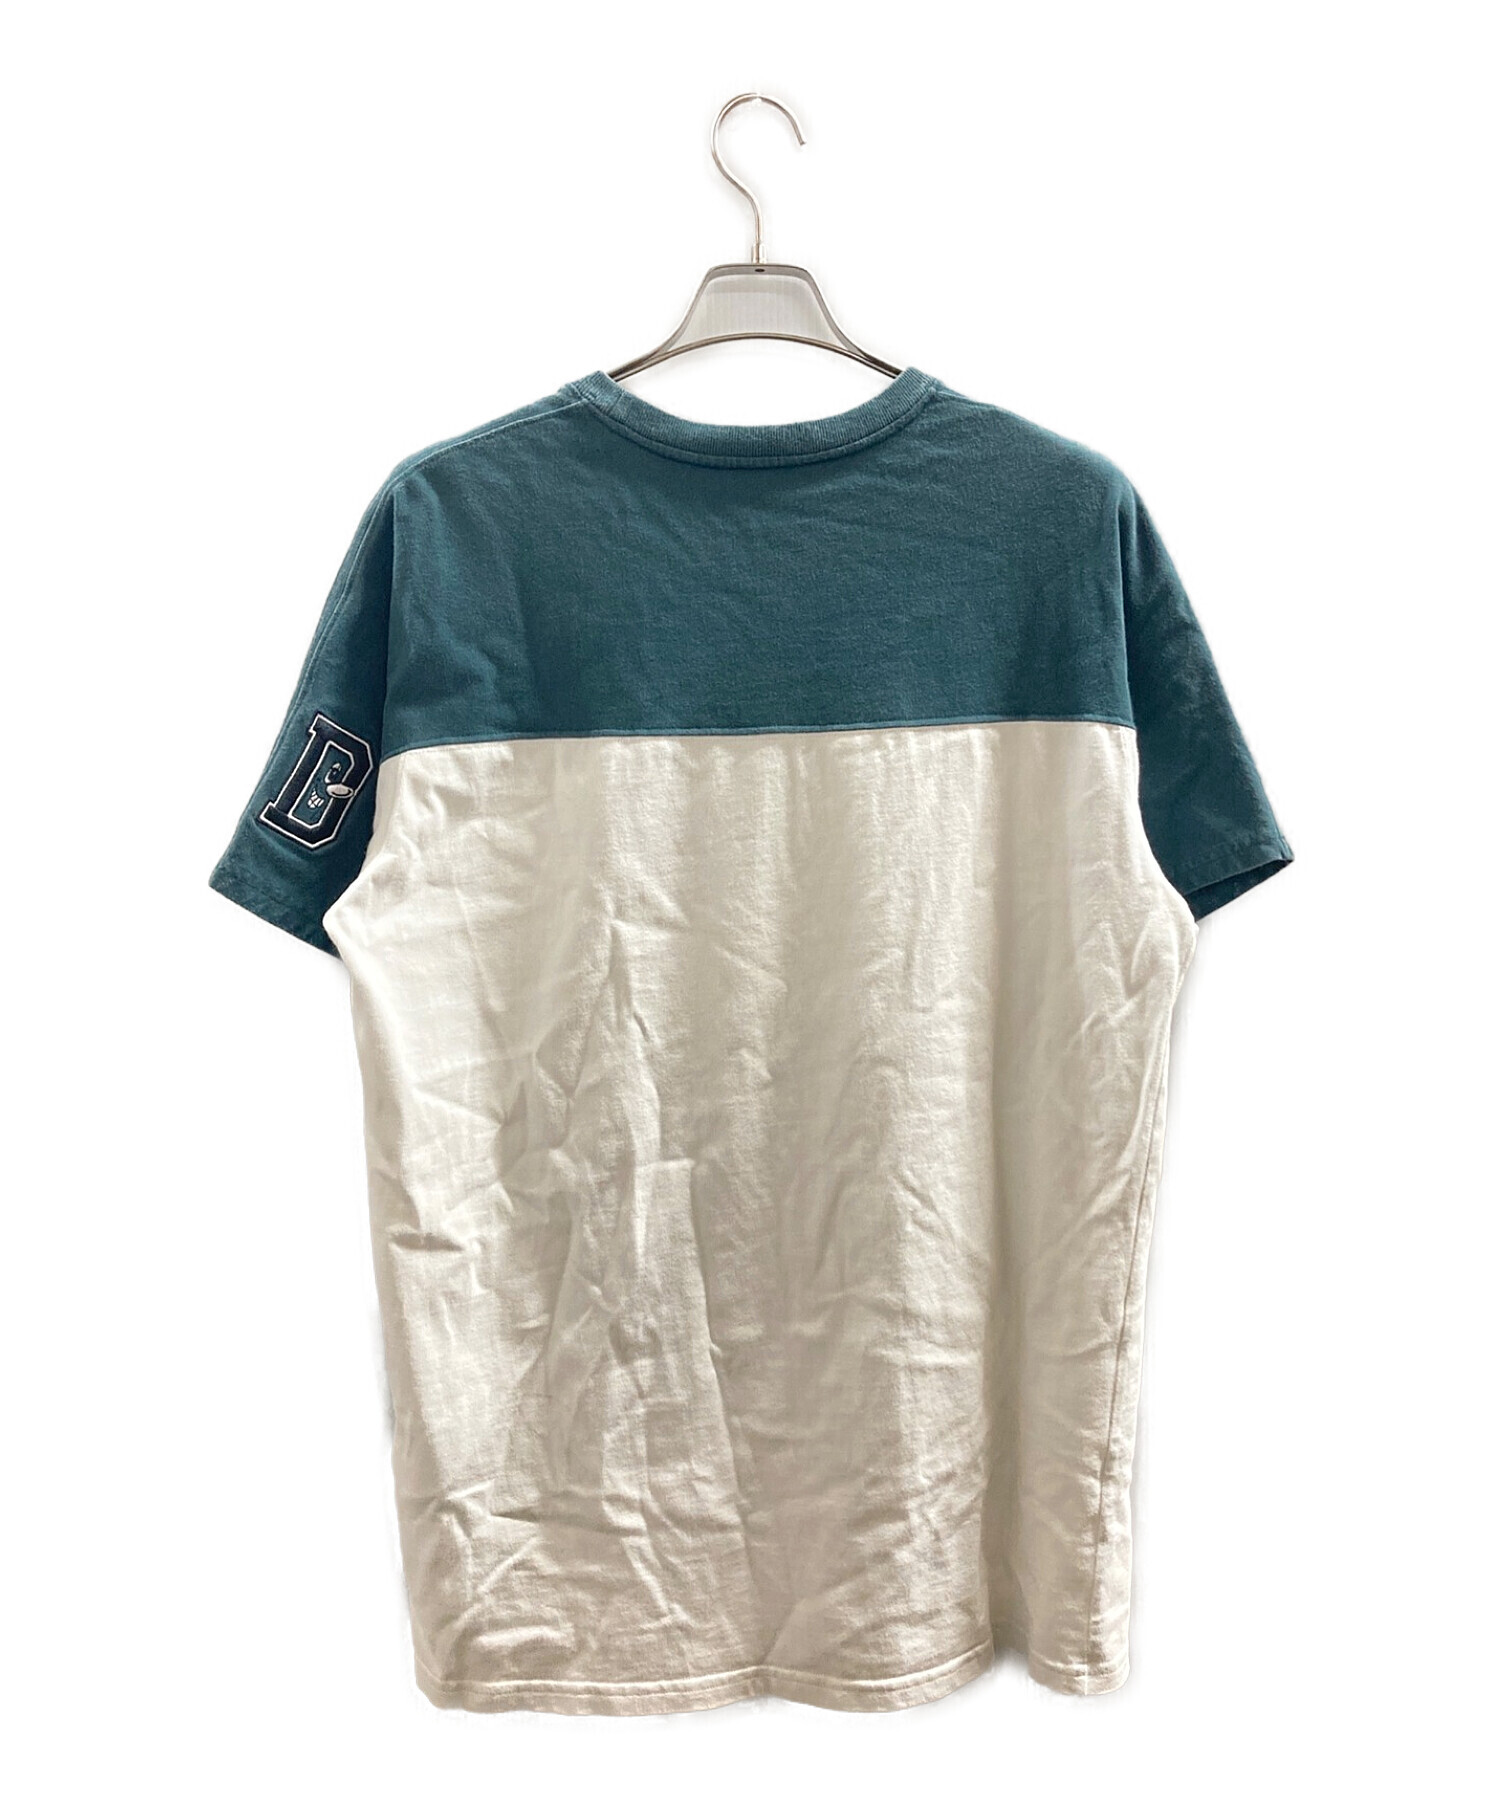 Dior (ディオール) KENNY SCHARF オーバーサイズTシャツ グリーン×ホワイト サイズ:L